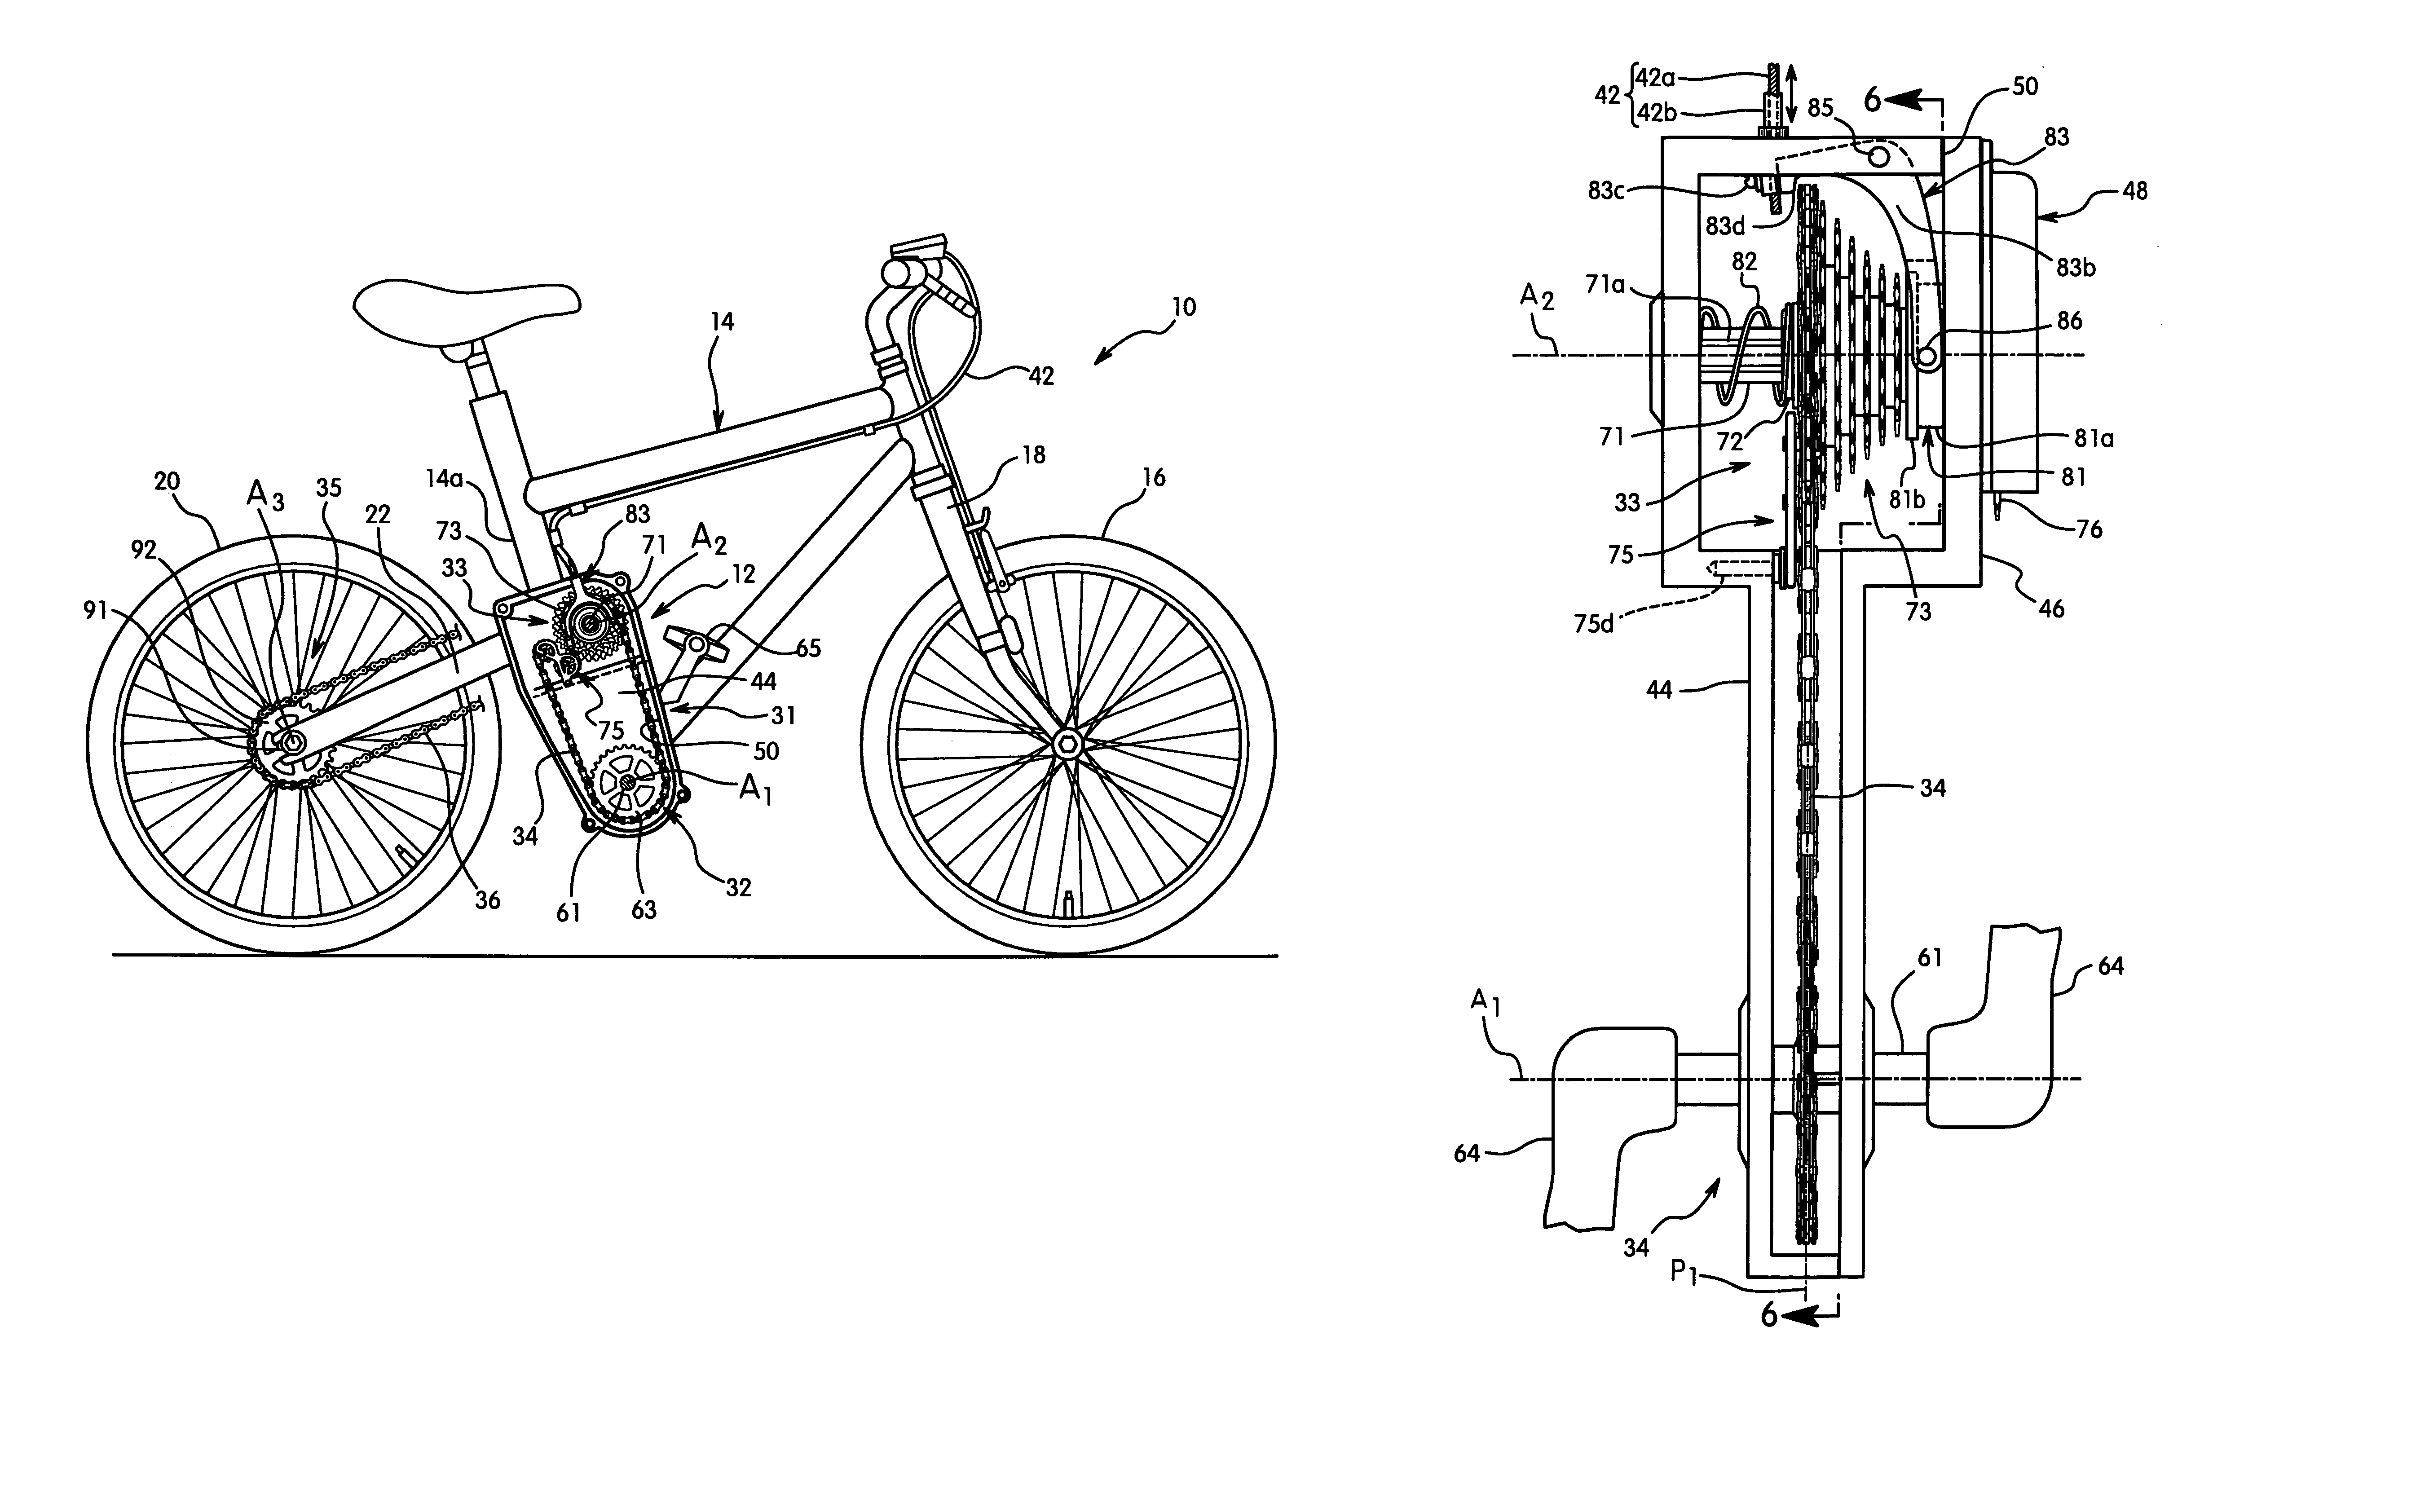 Bicycle transmission